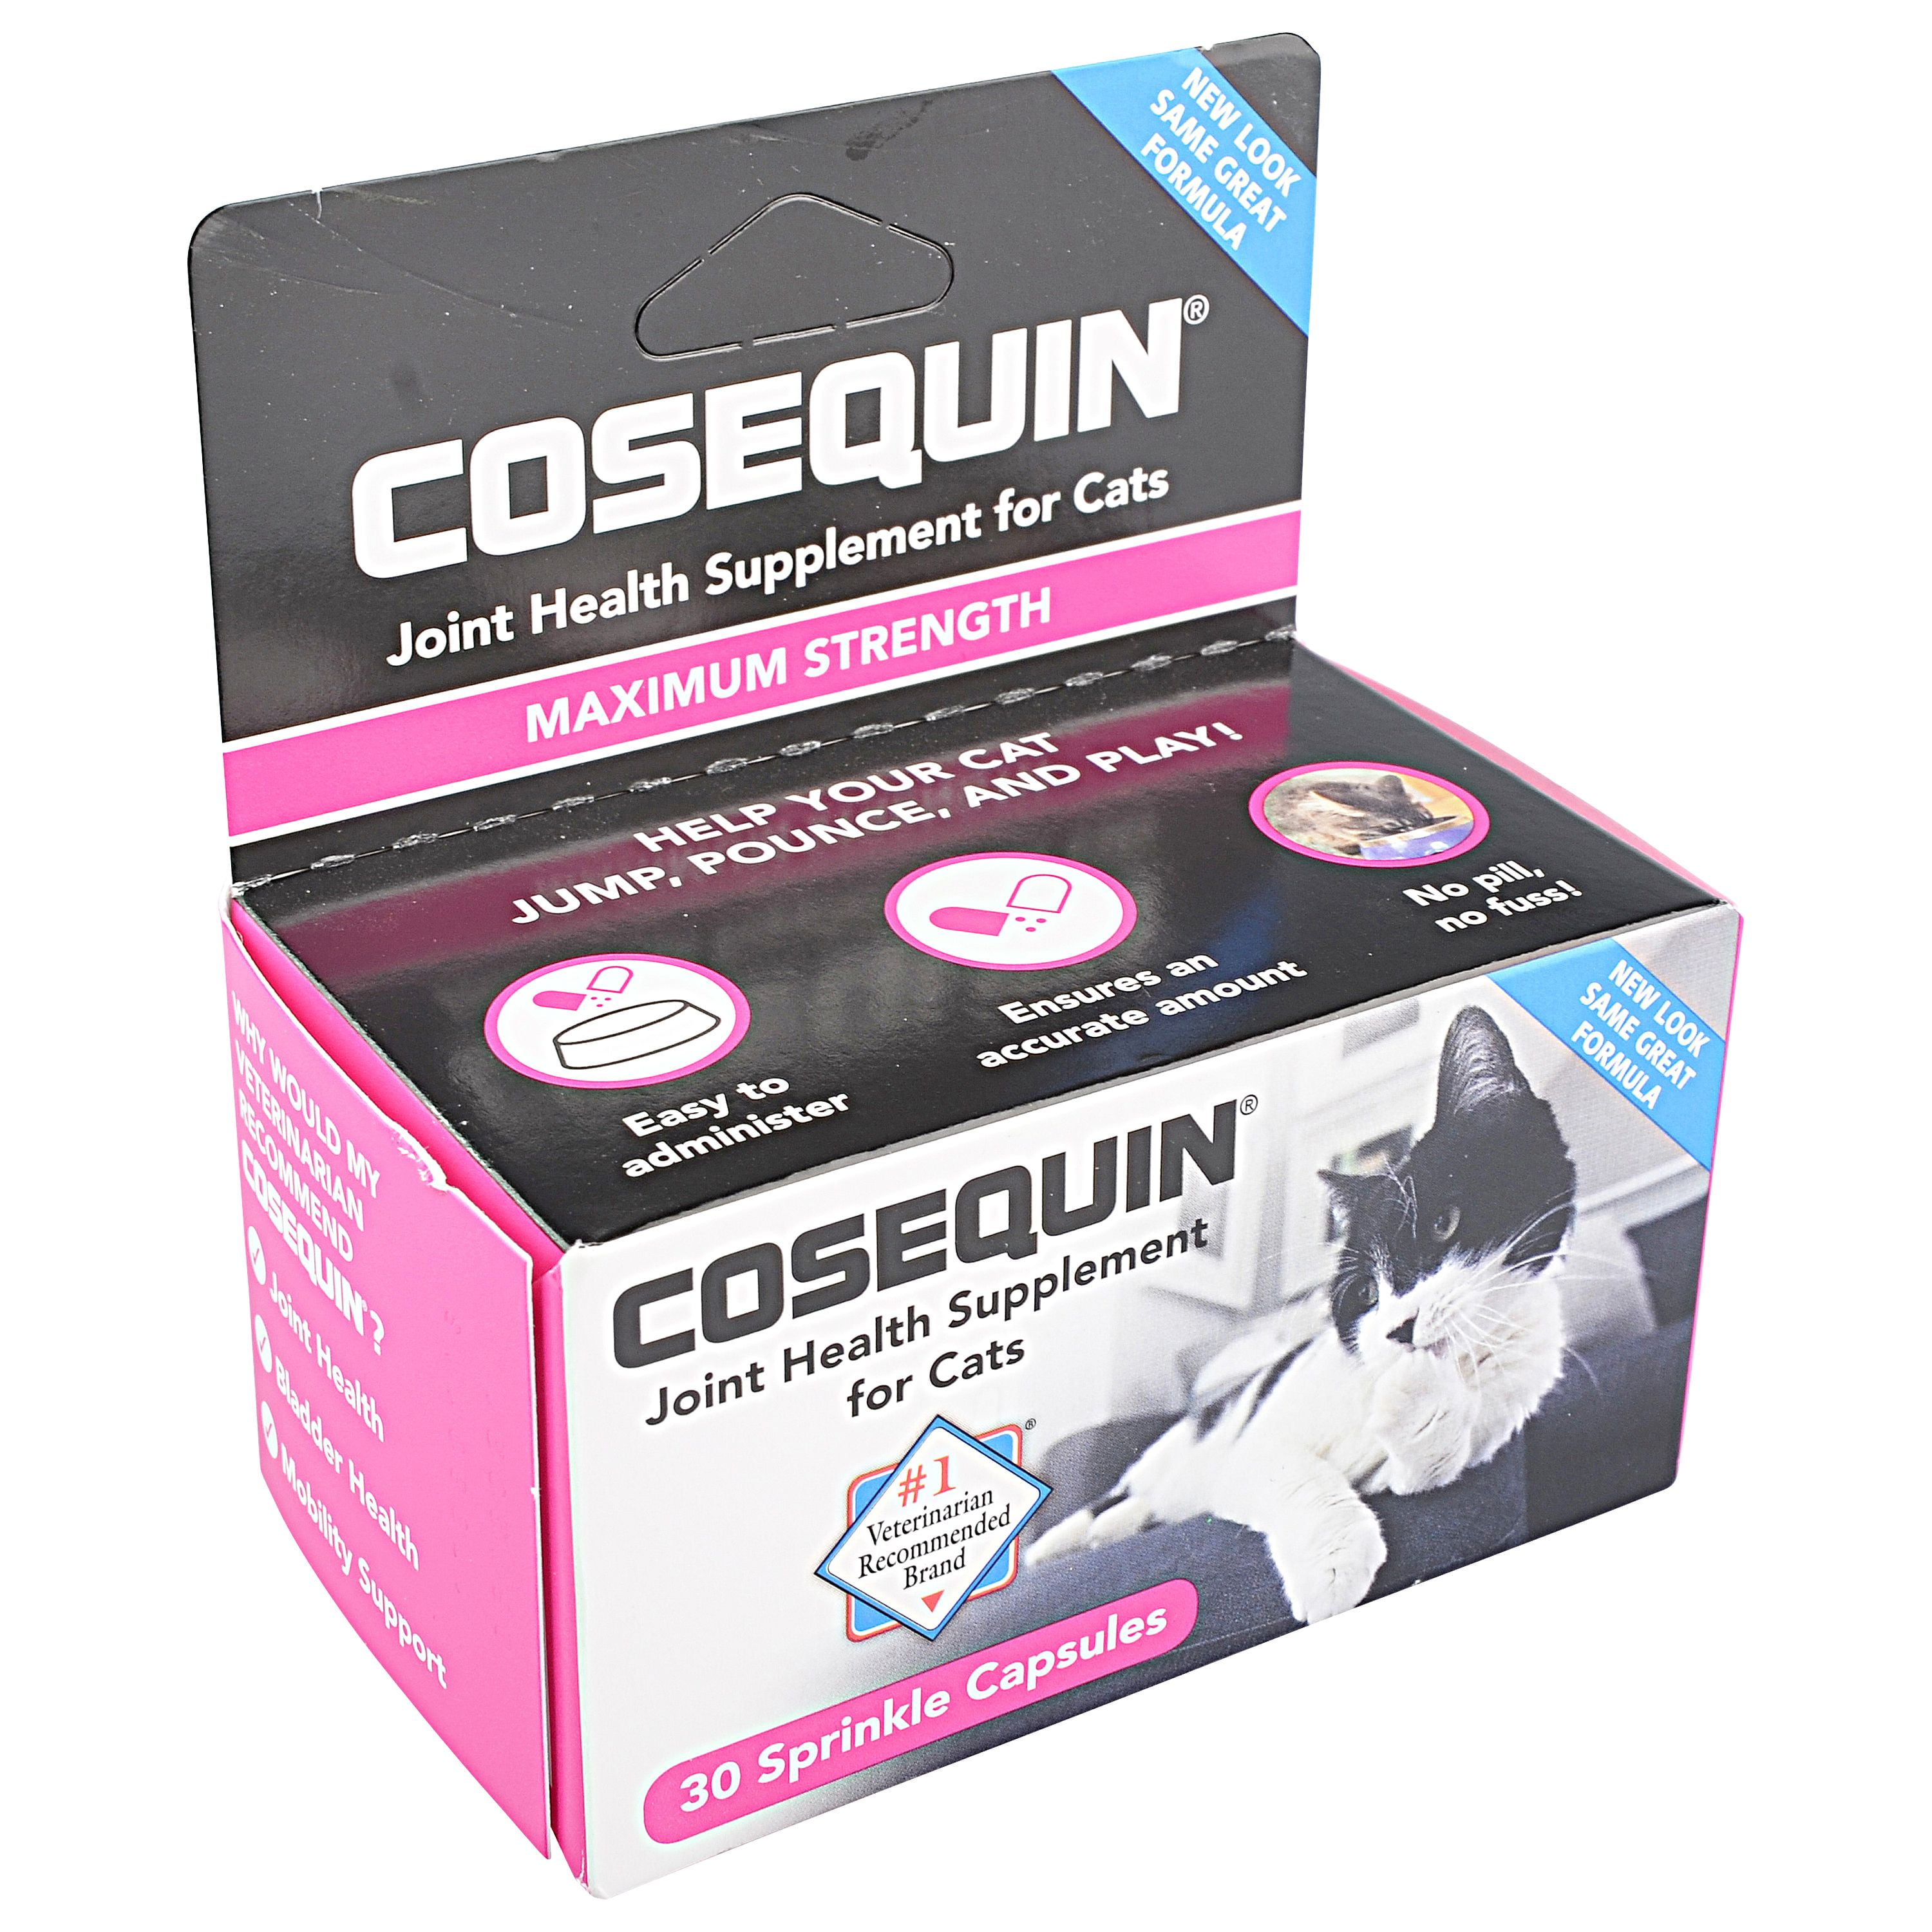 Cosequin Original Joint Health Sprinkle Capsules Cat Supplement, 30 count